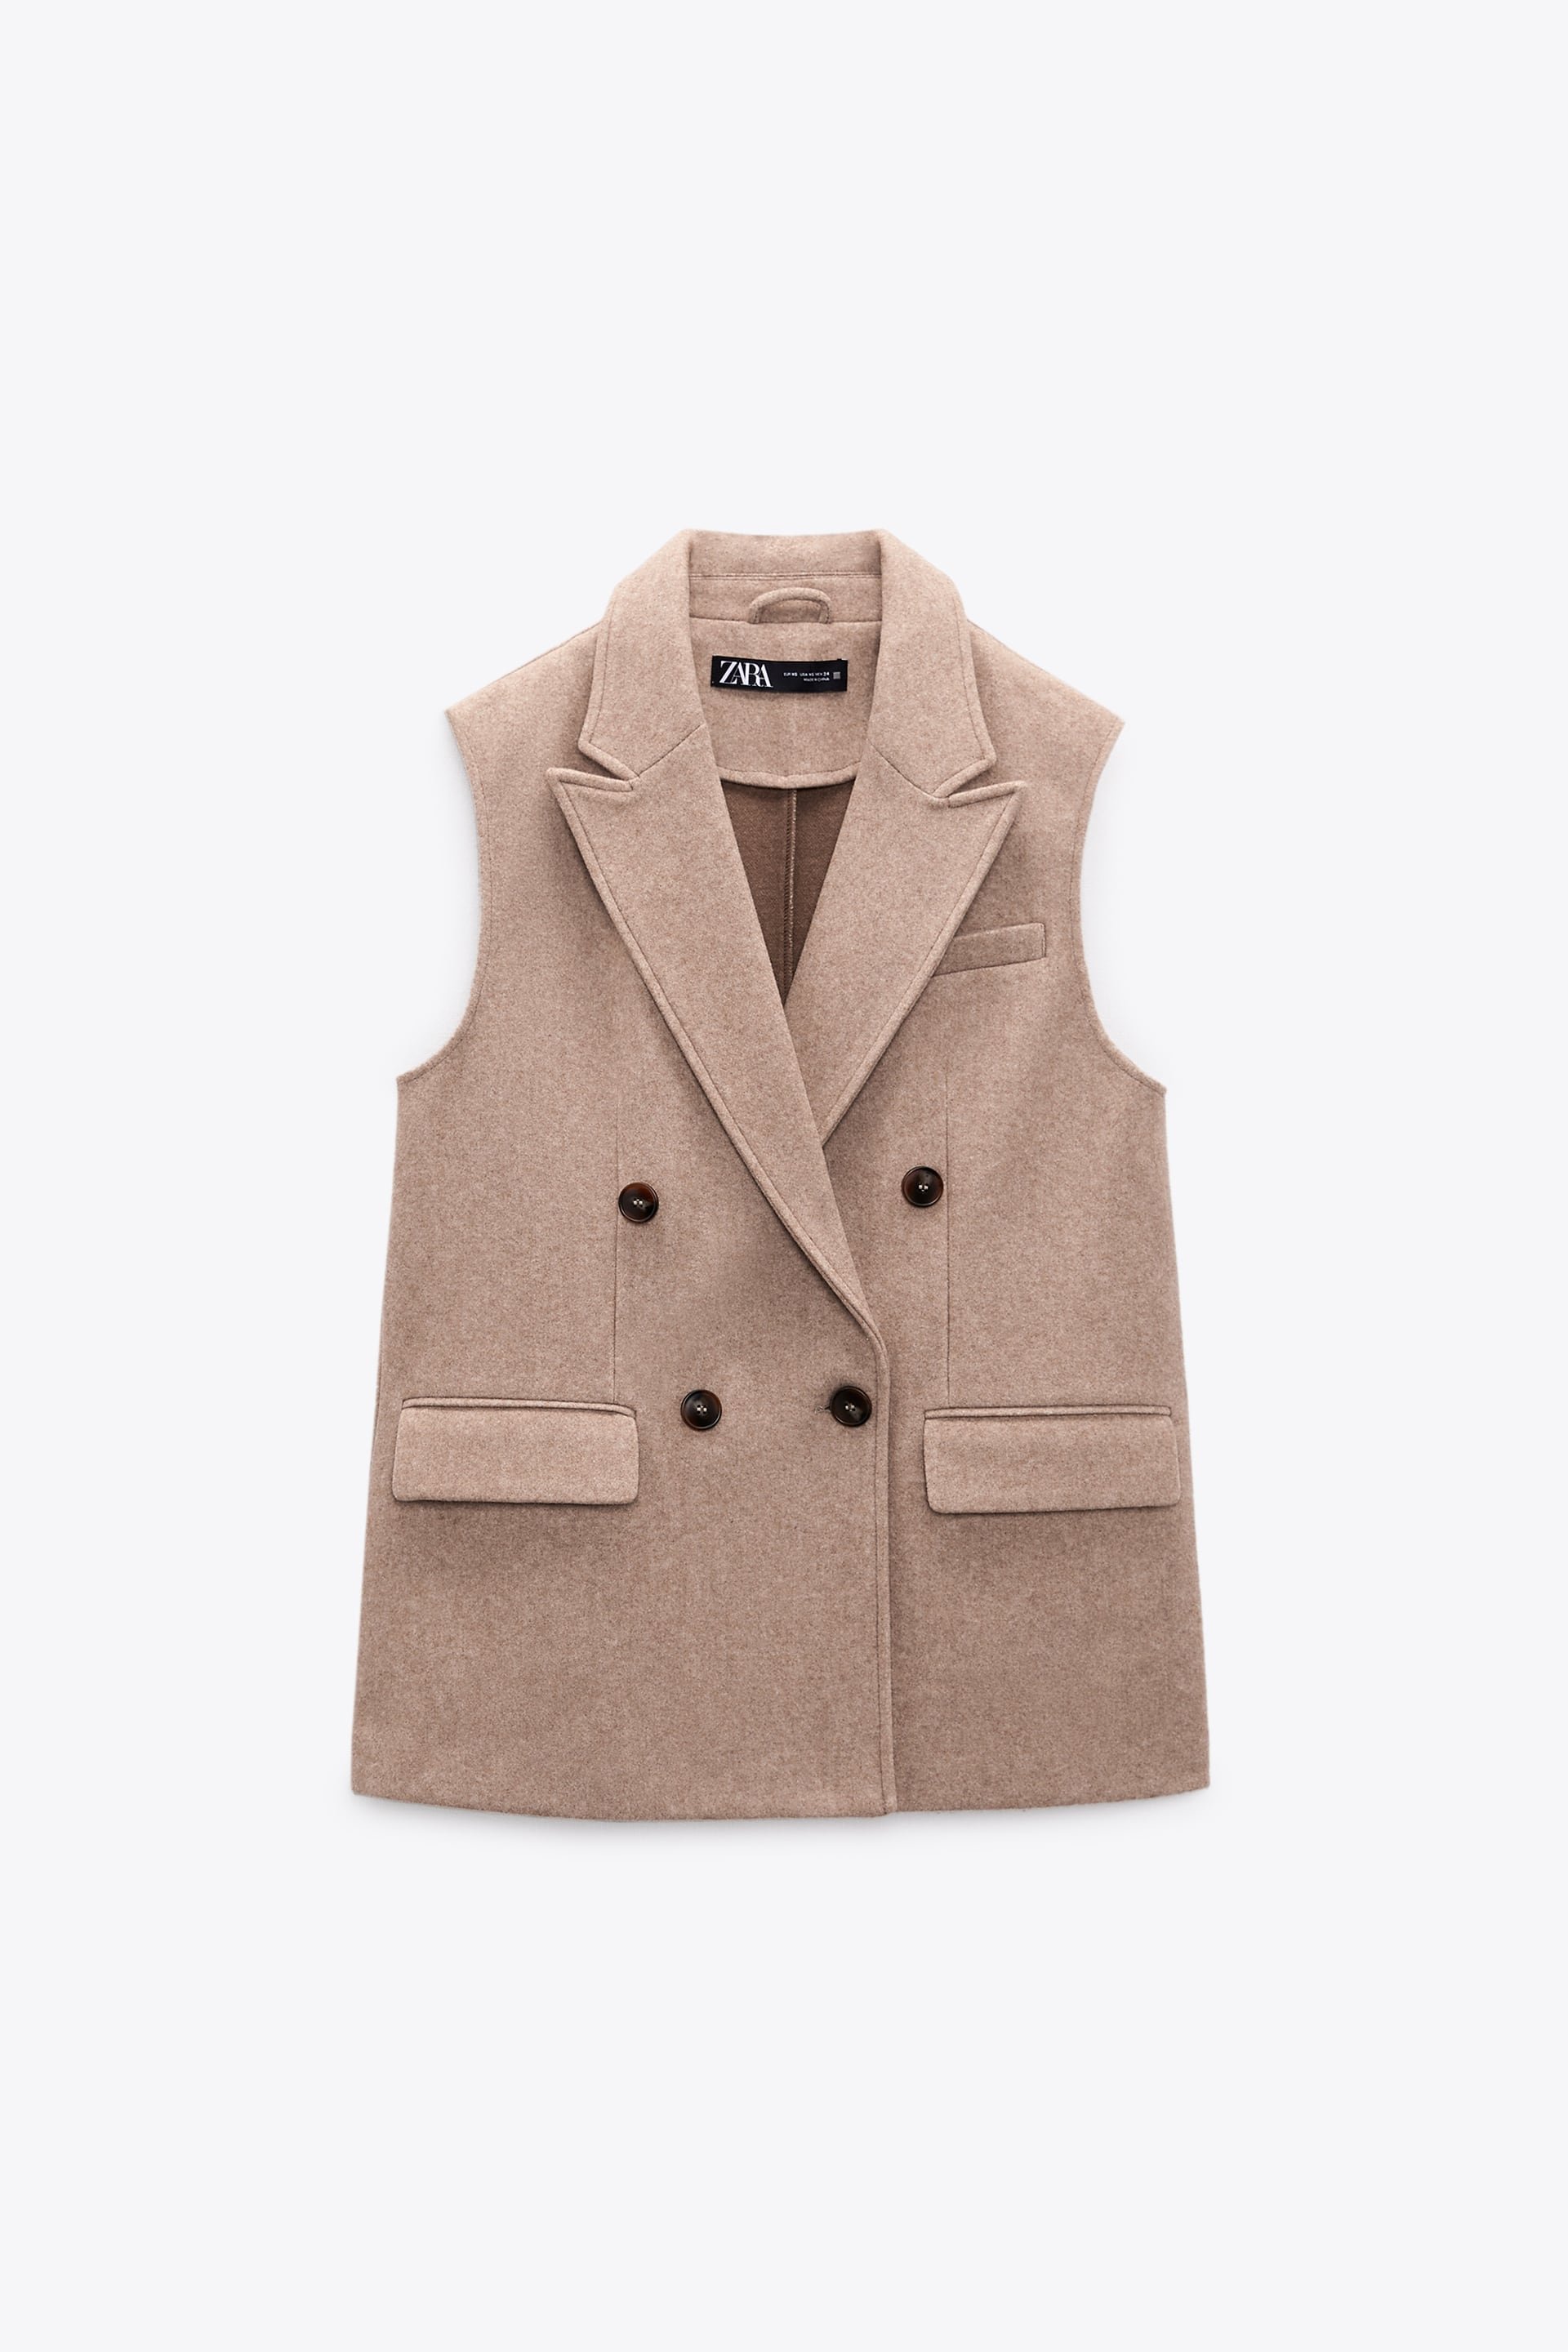 Zara Soft Double-Breasted Waistcoat.jpg